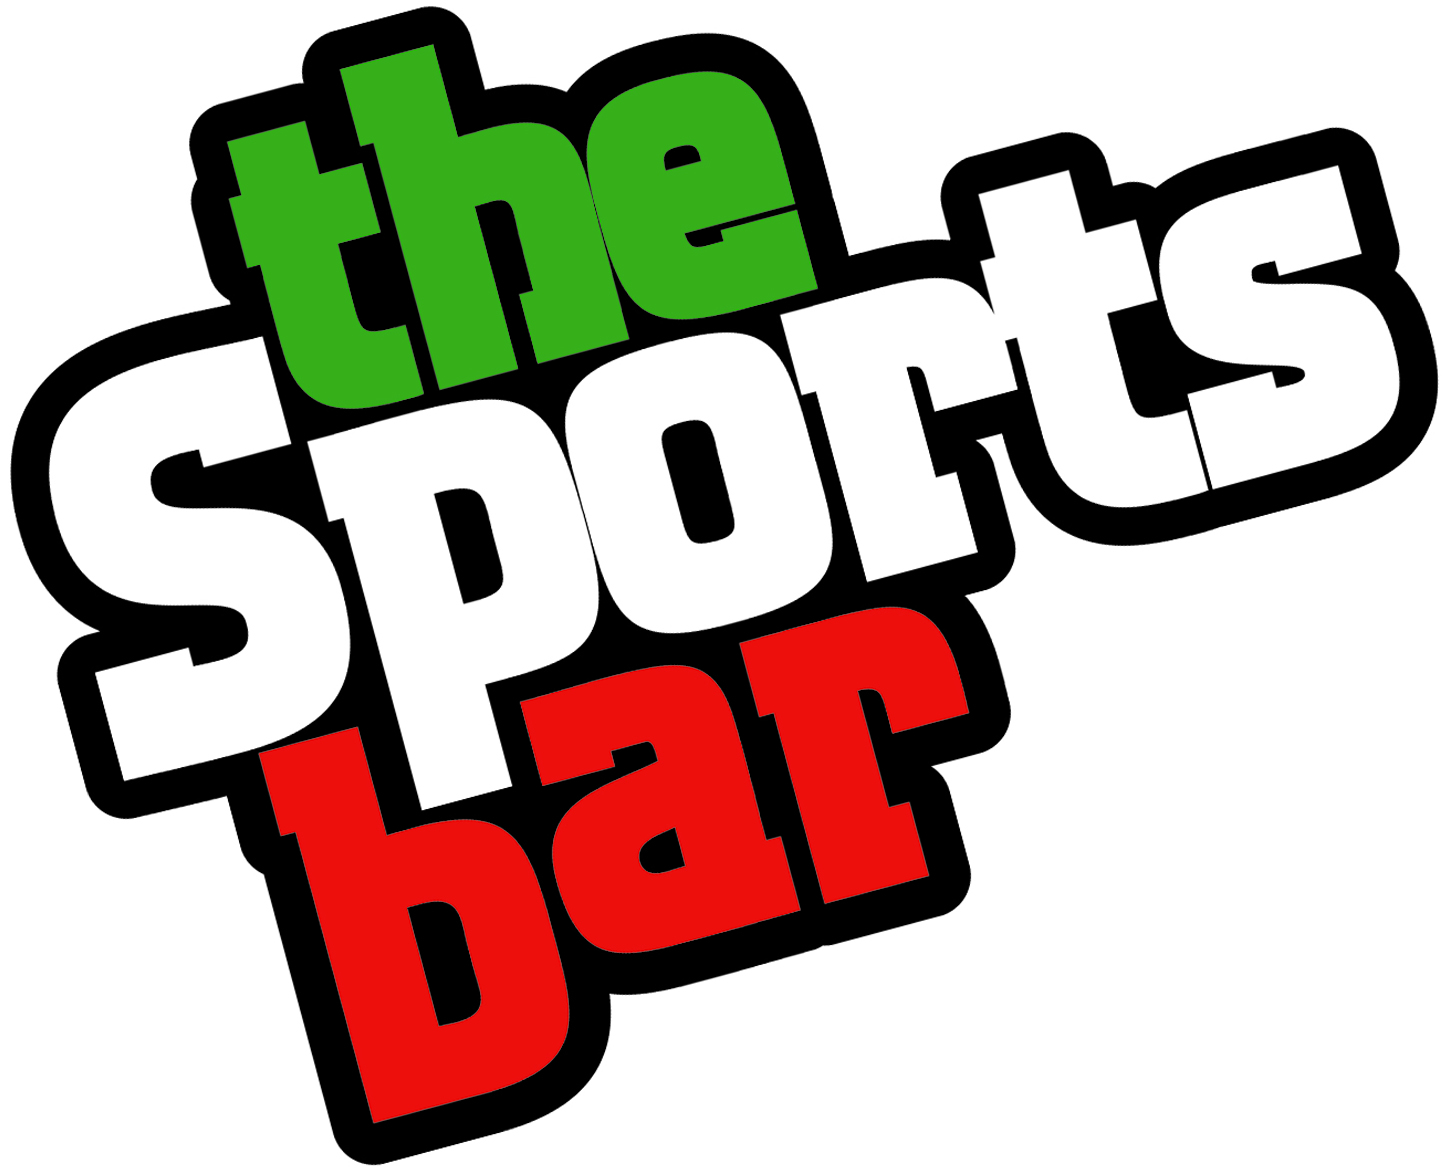 The Sports Bar Clipart